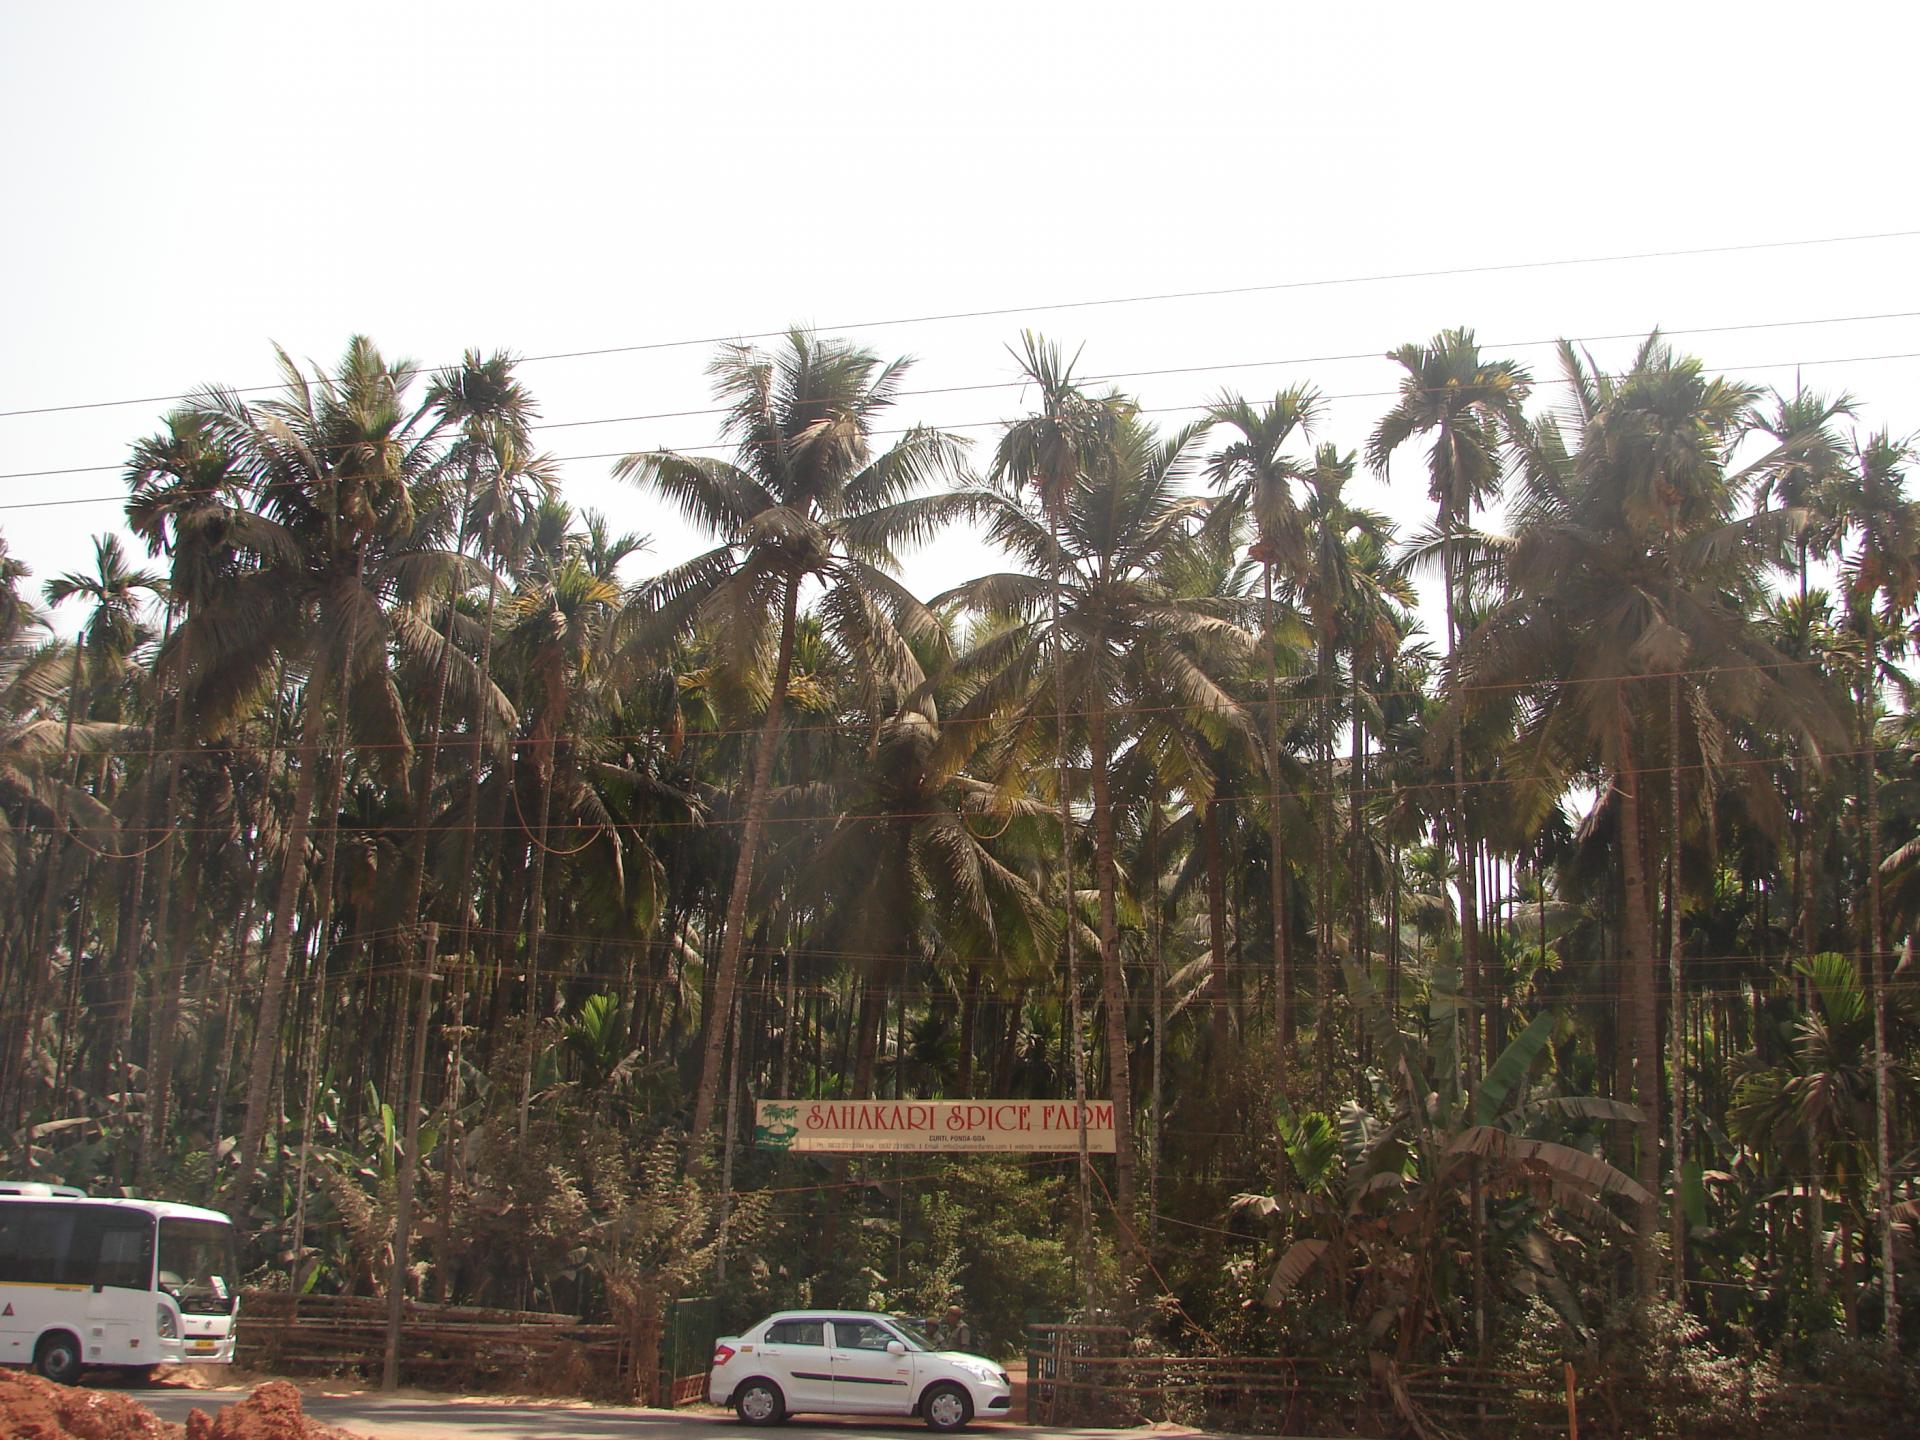 Sahakari Spice Plantation in Goa